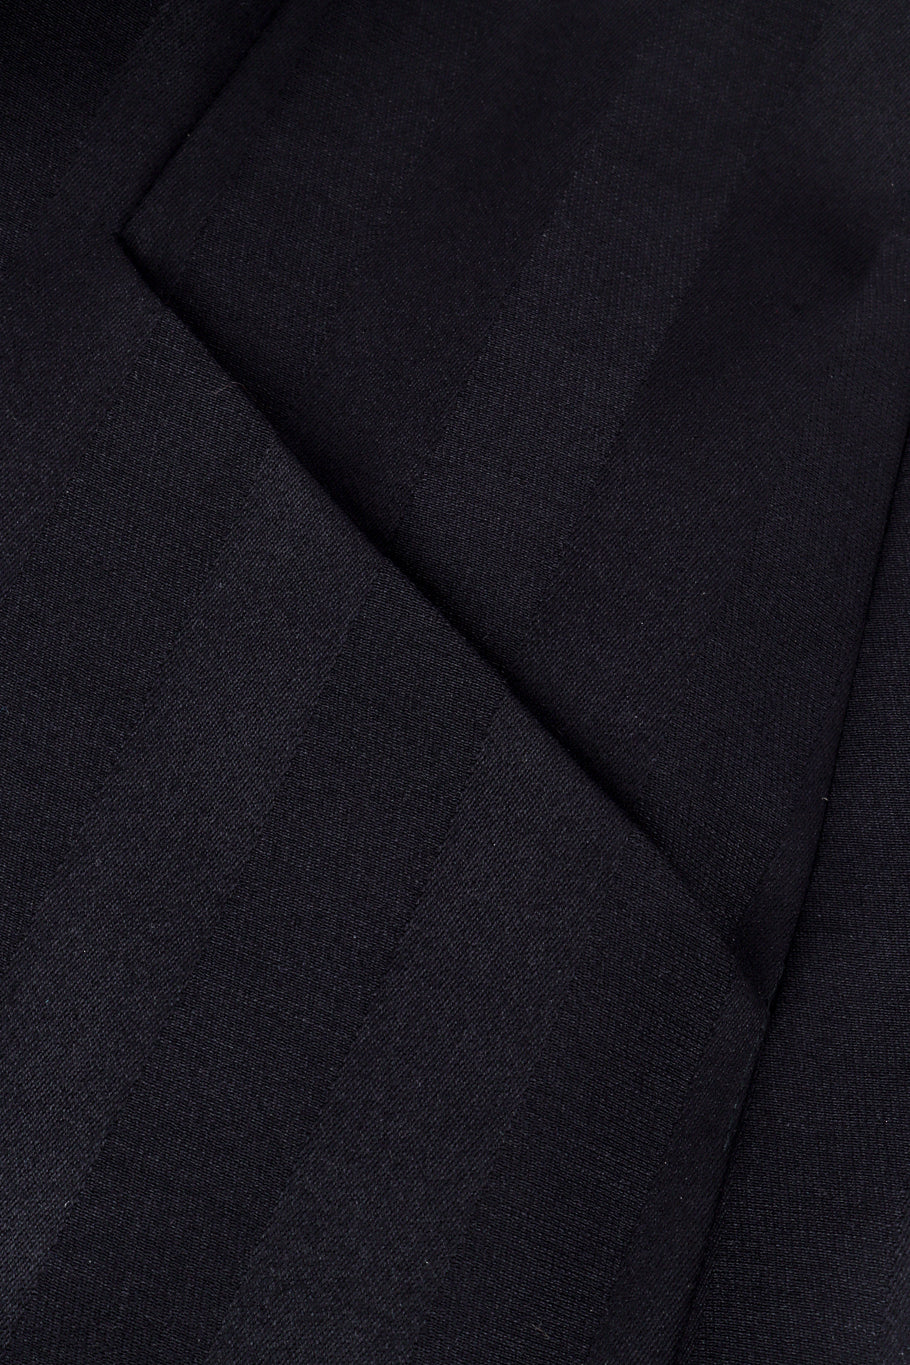 Vented Wool Stripe Blazer & Skirt Suit by Givenchy blazer pocket @recessla